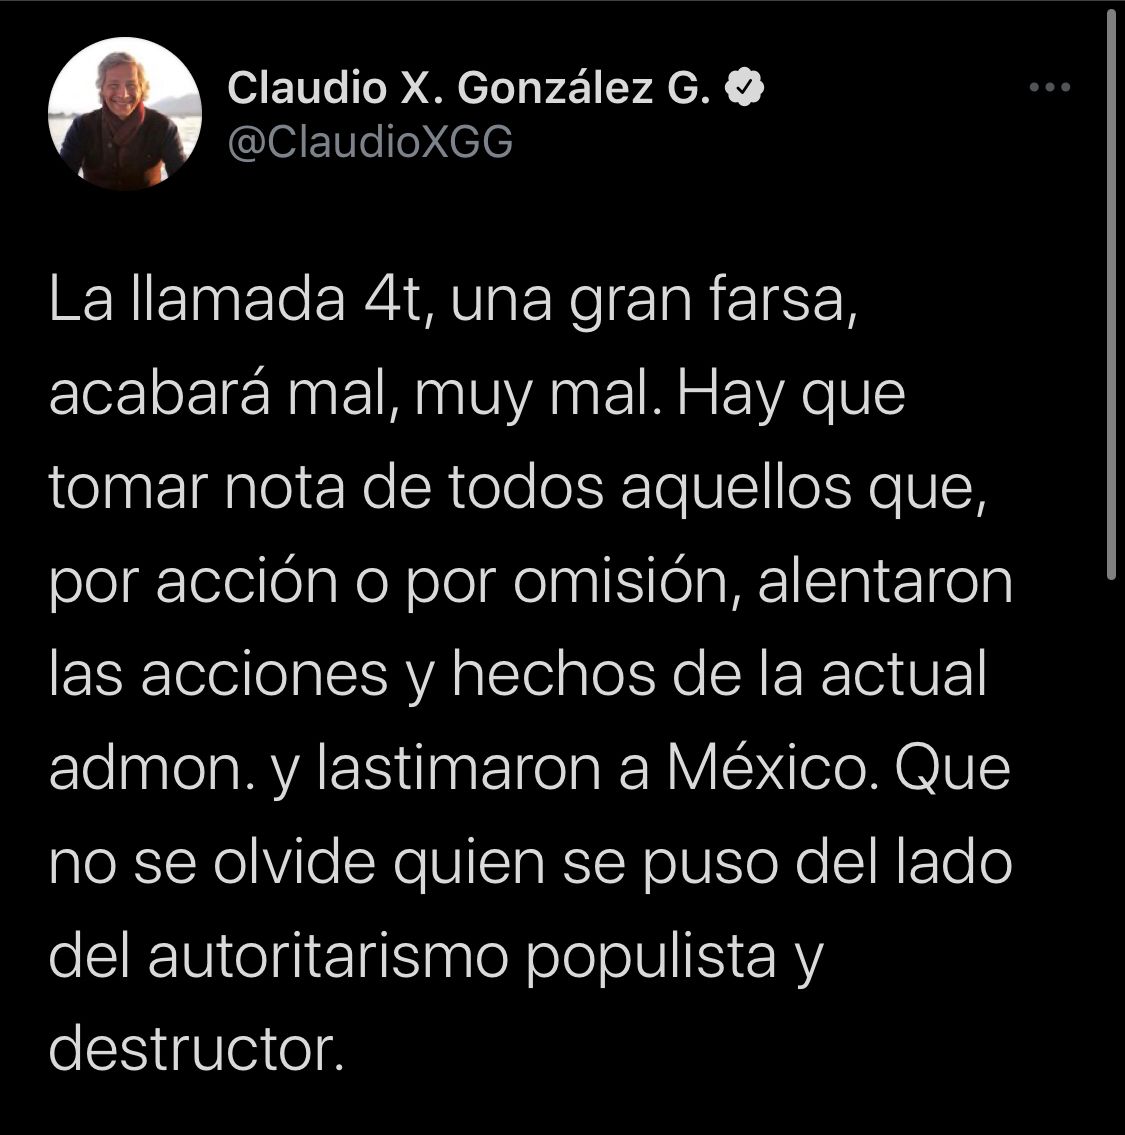 Claudio X. González lanzó amenaza en Twitter (Foto: Twitter/@ClaudioXGG)